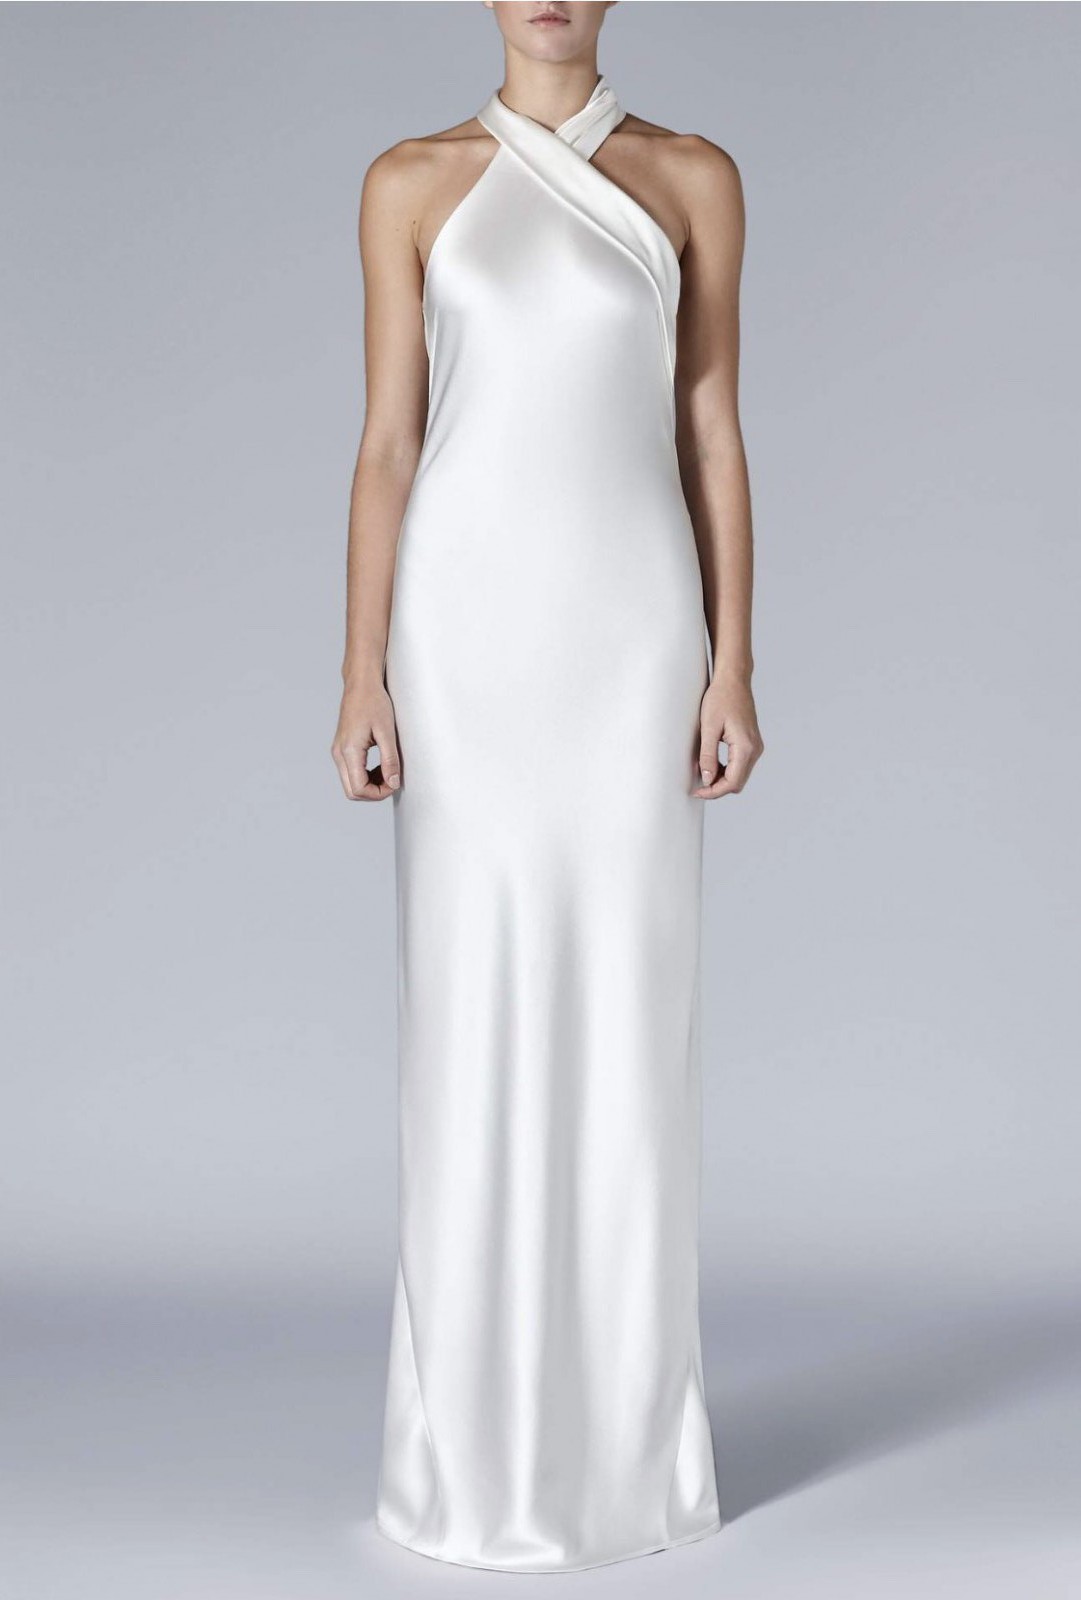 Galvan London Mayfair Used Wedding Dress Save 58% - Stillwhite